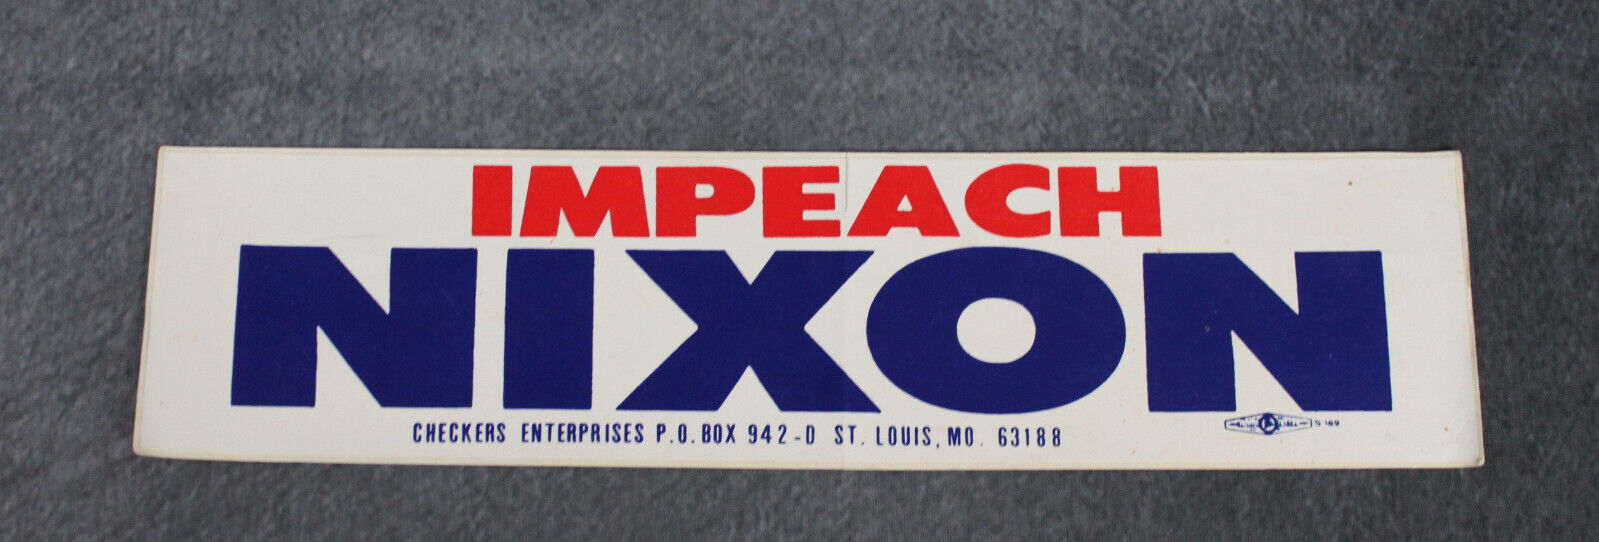 Original Vintage Impeach Nixon Bumper Sticker Checkers Enterprises